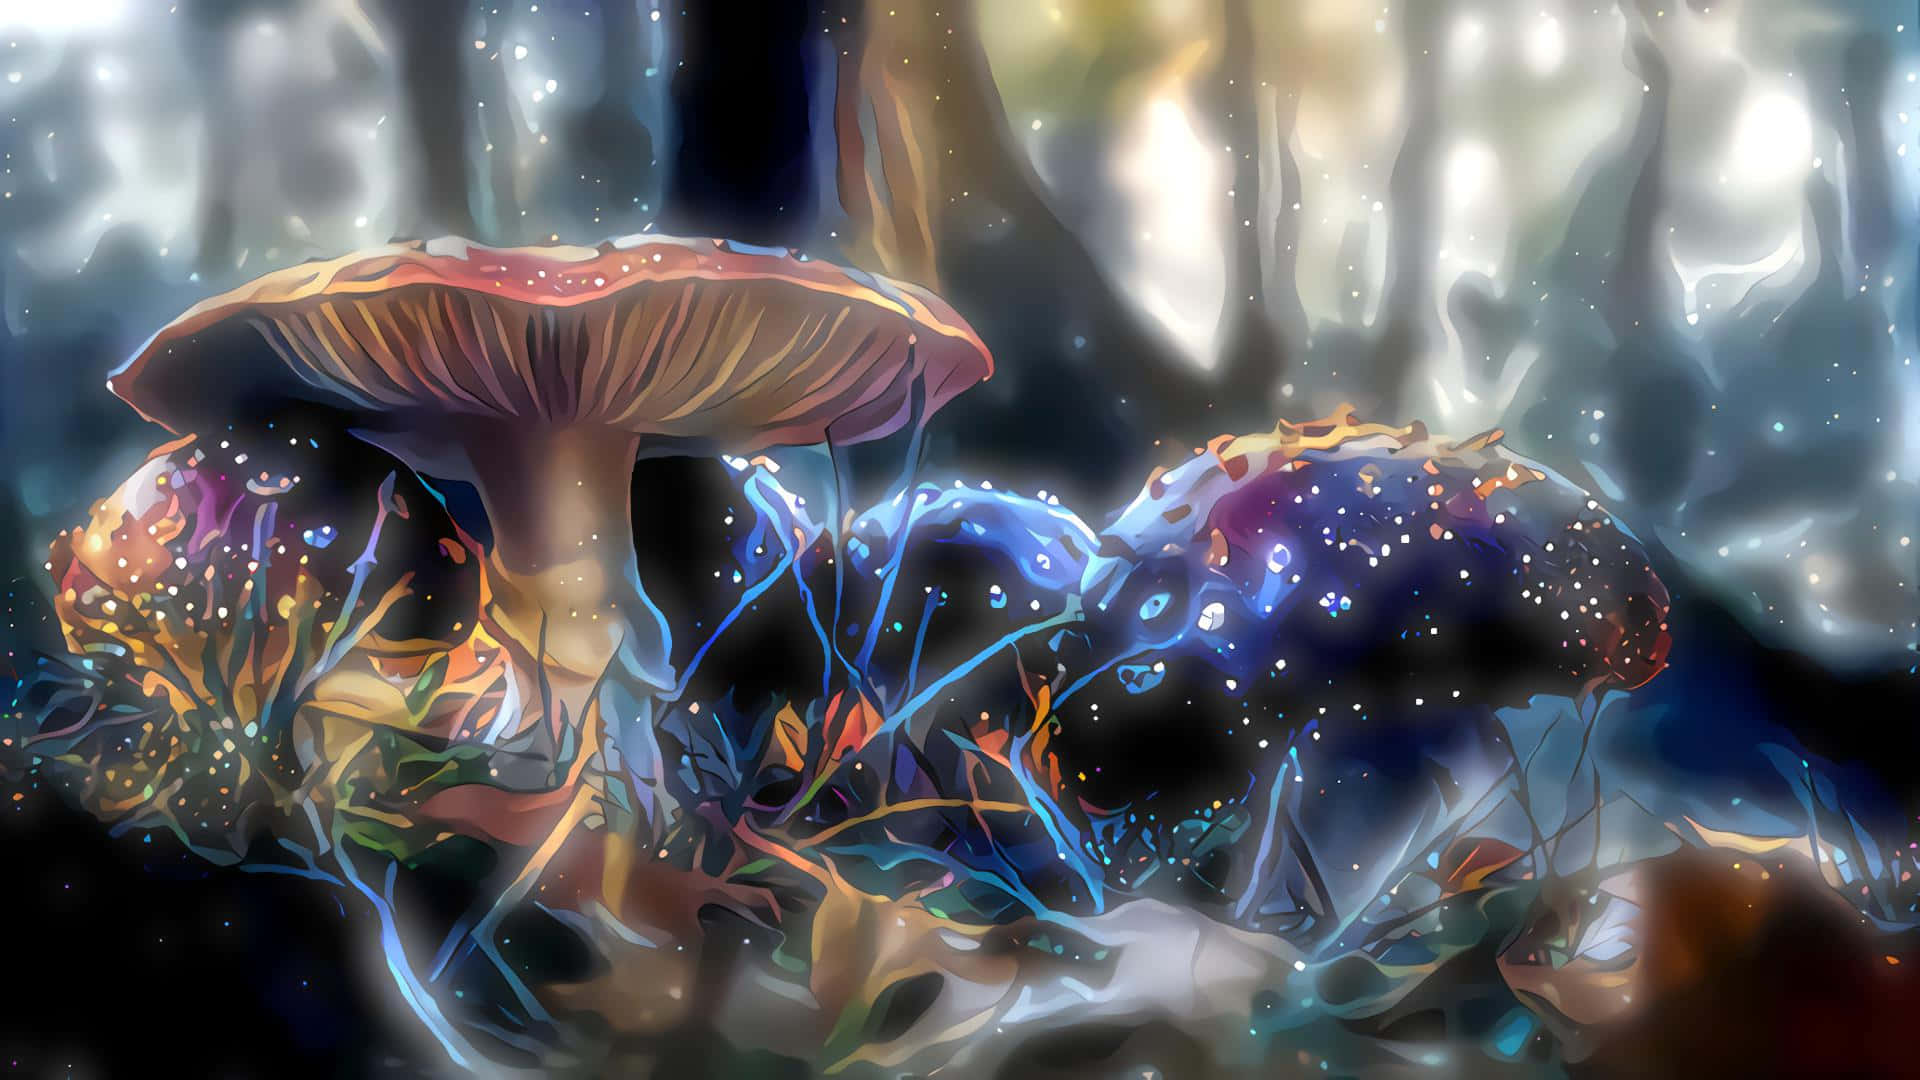 Enchanting Fungus With Glowing Cap Digital Art Wallpaper